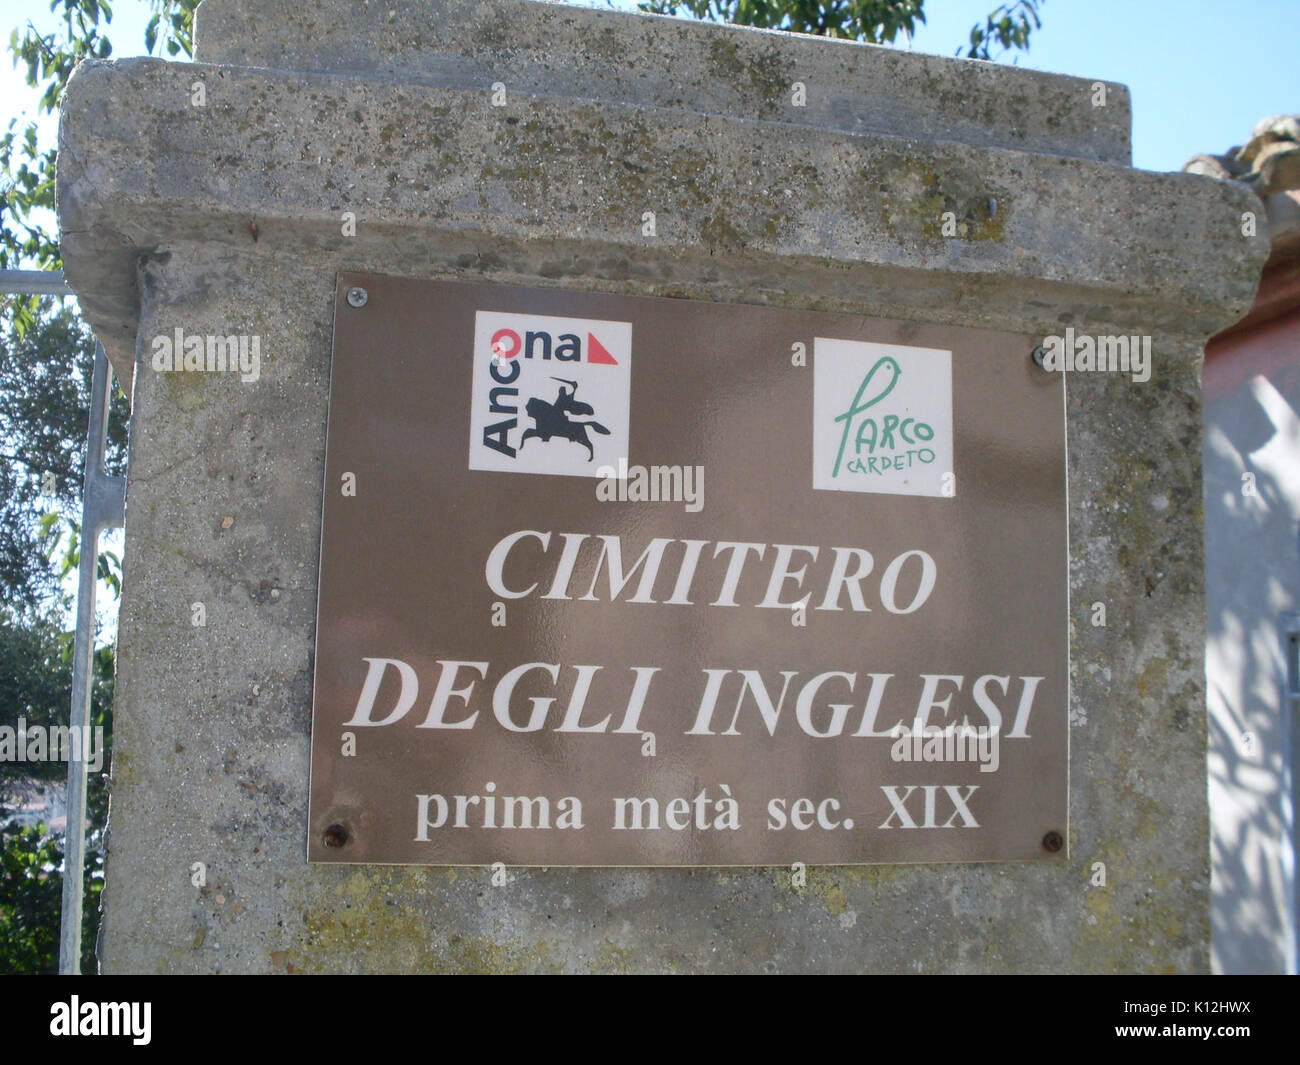 Ancona 24 10 2010 Cardeto Cimitero Inglesi Targa Stockfoto